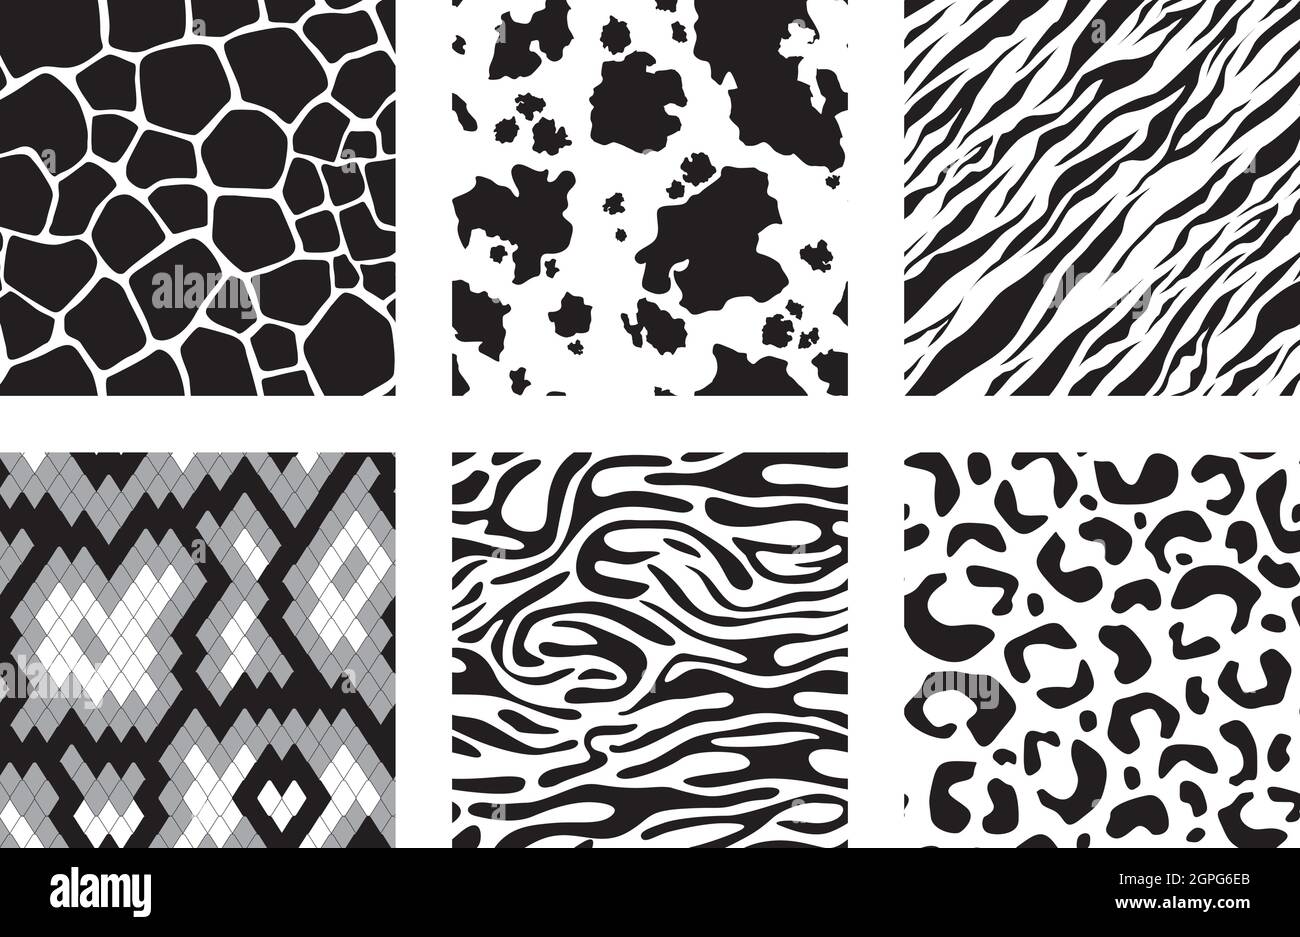 Animals skins patterns. Tiger giraffe zebra leopard vector seamless background Stock Vector